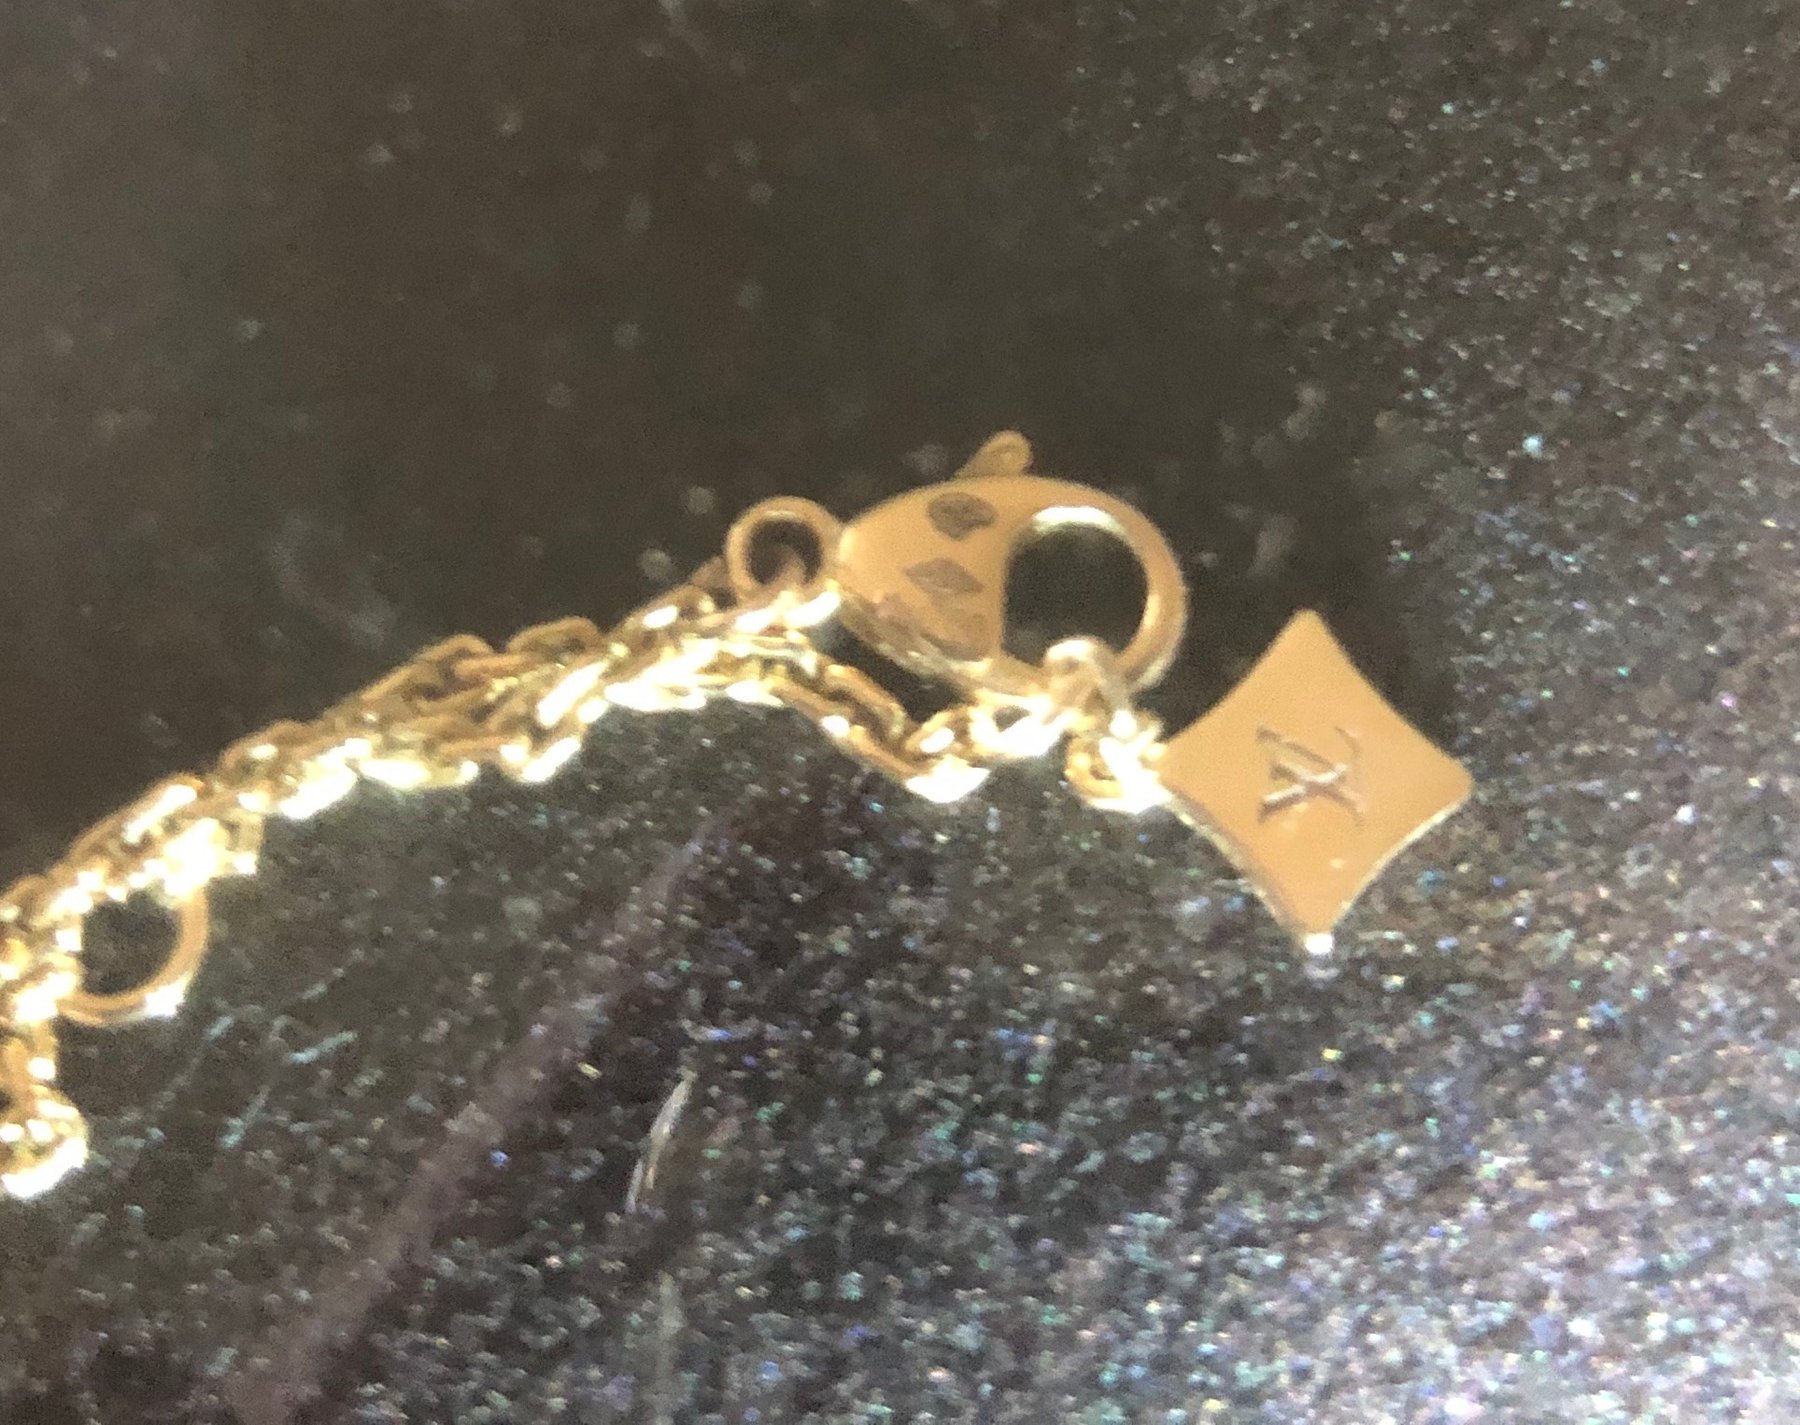 18 kt. Gold - Diamond zipper necklace C'est Laudier - Catawiki